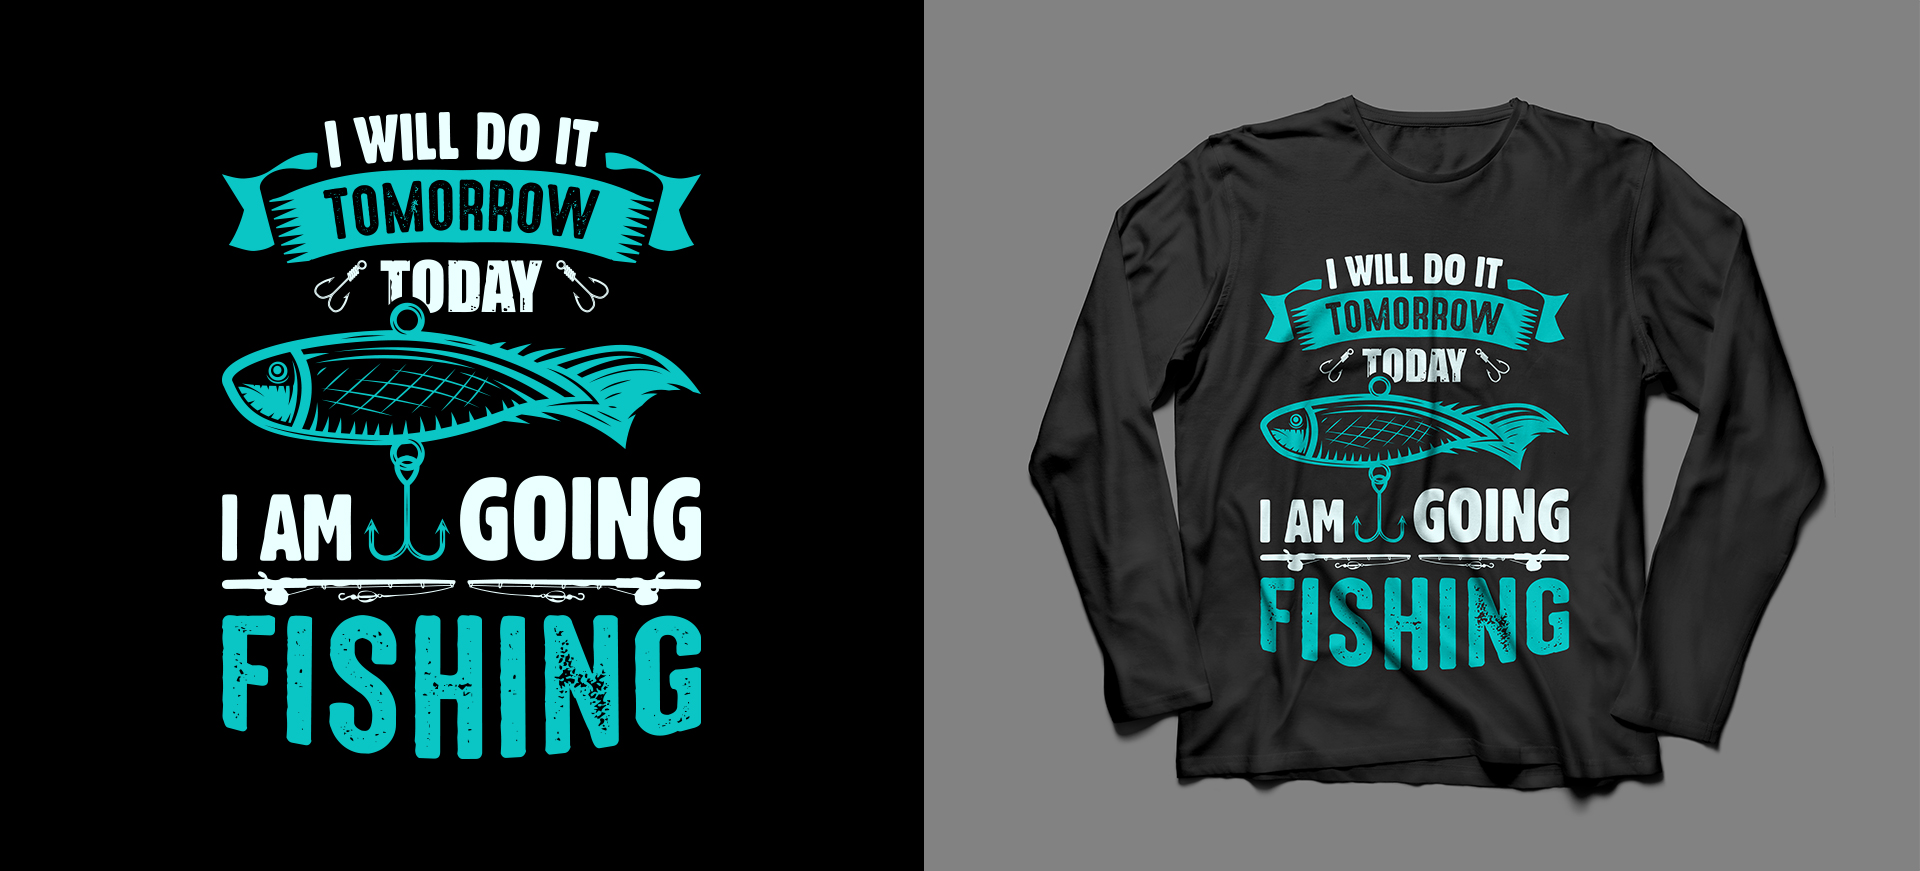 6 fishing t shirt design bundle – Fishing t shirt designs